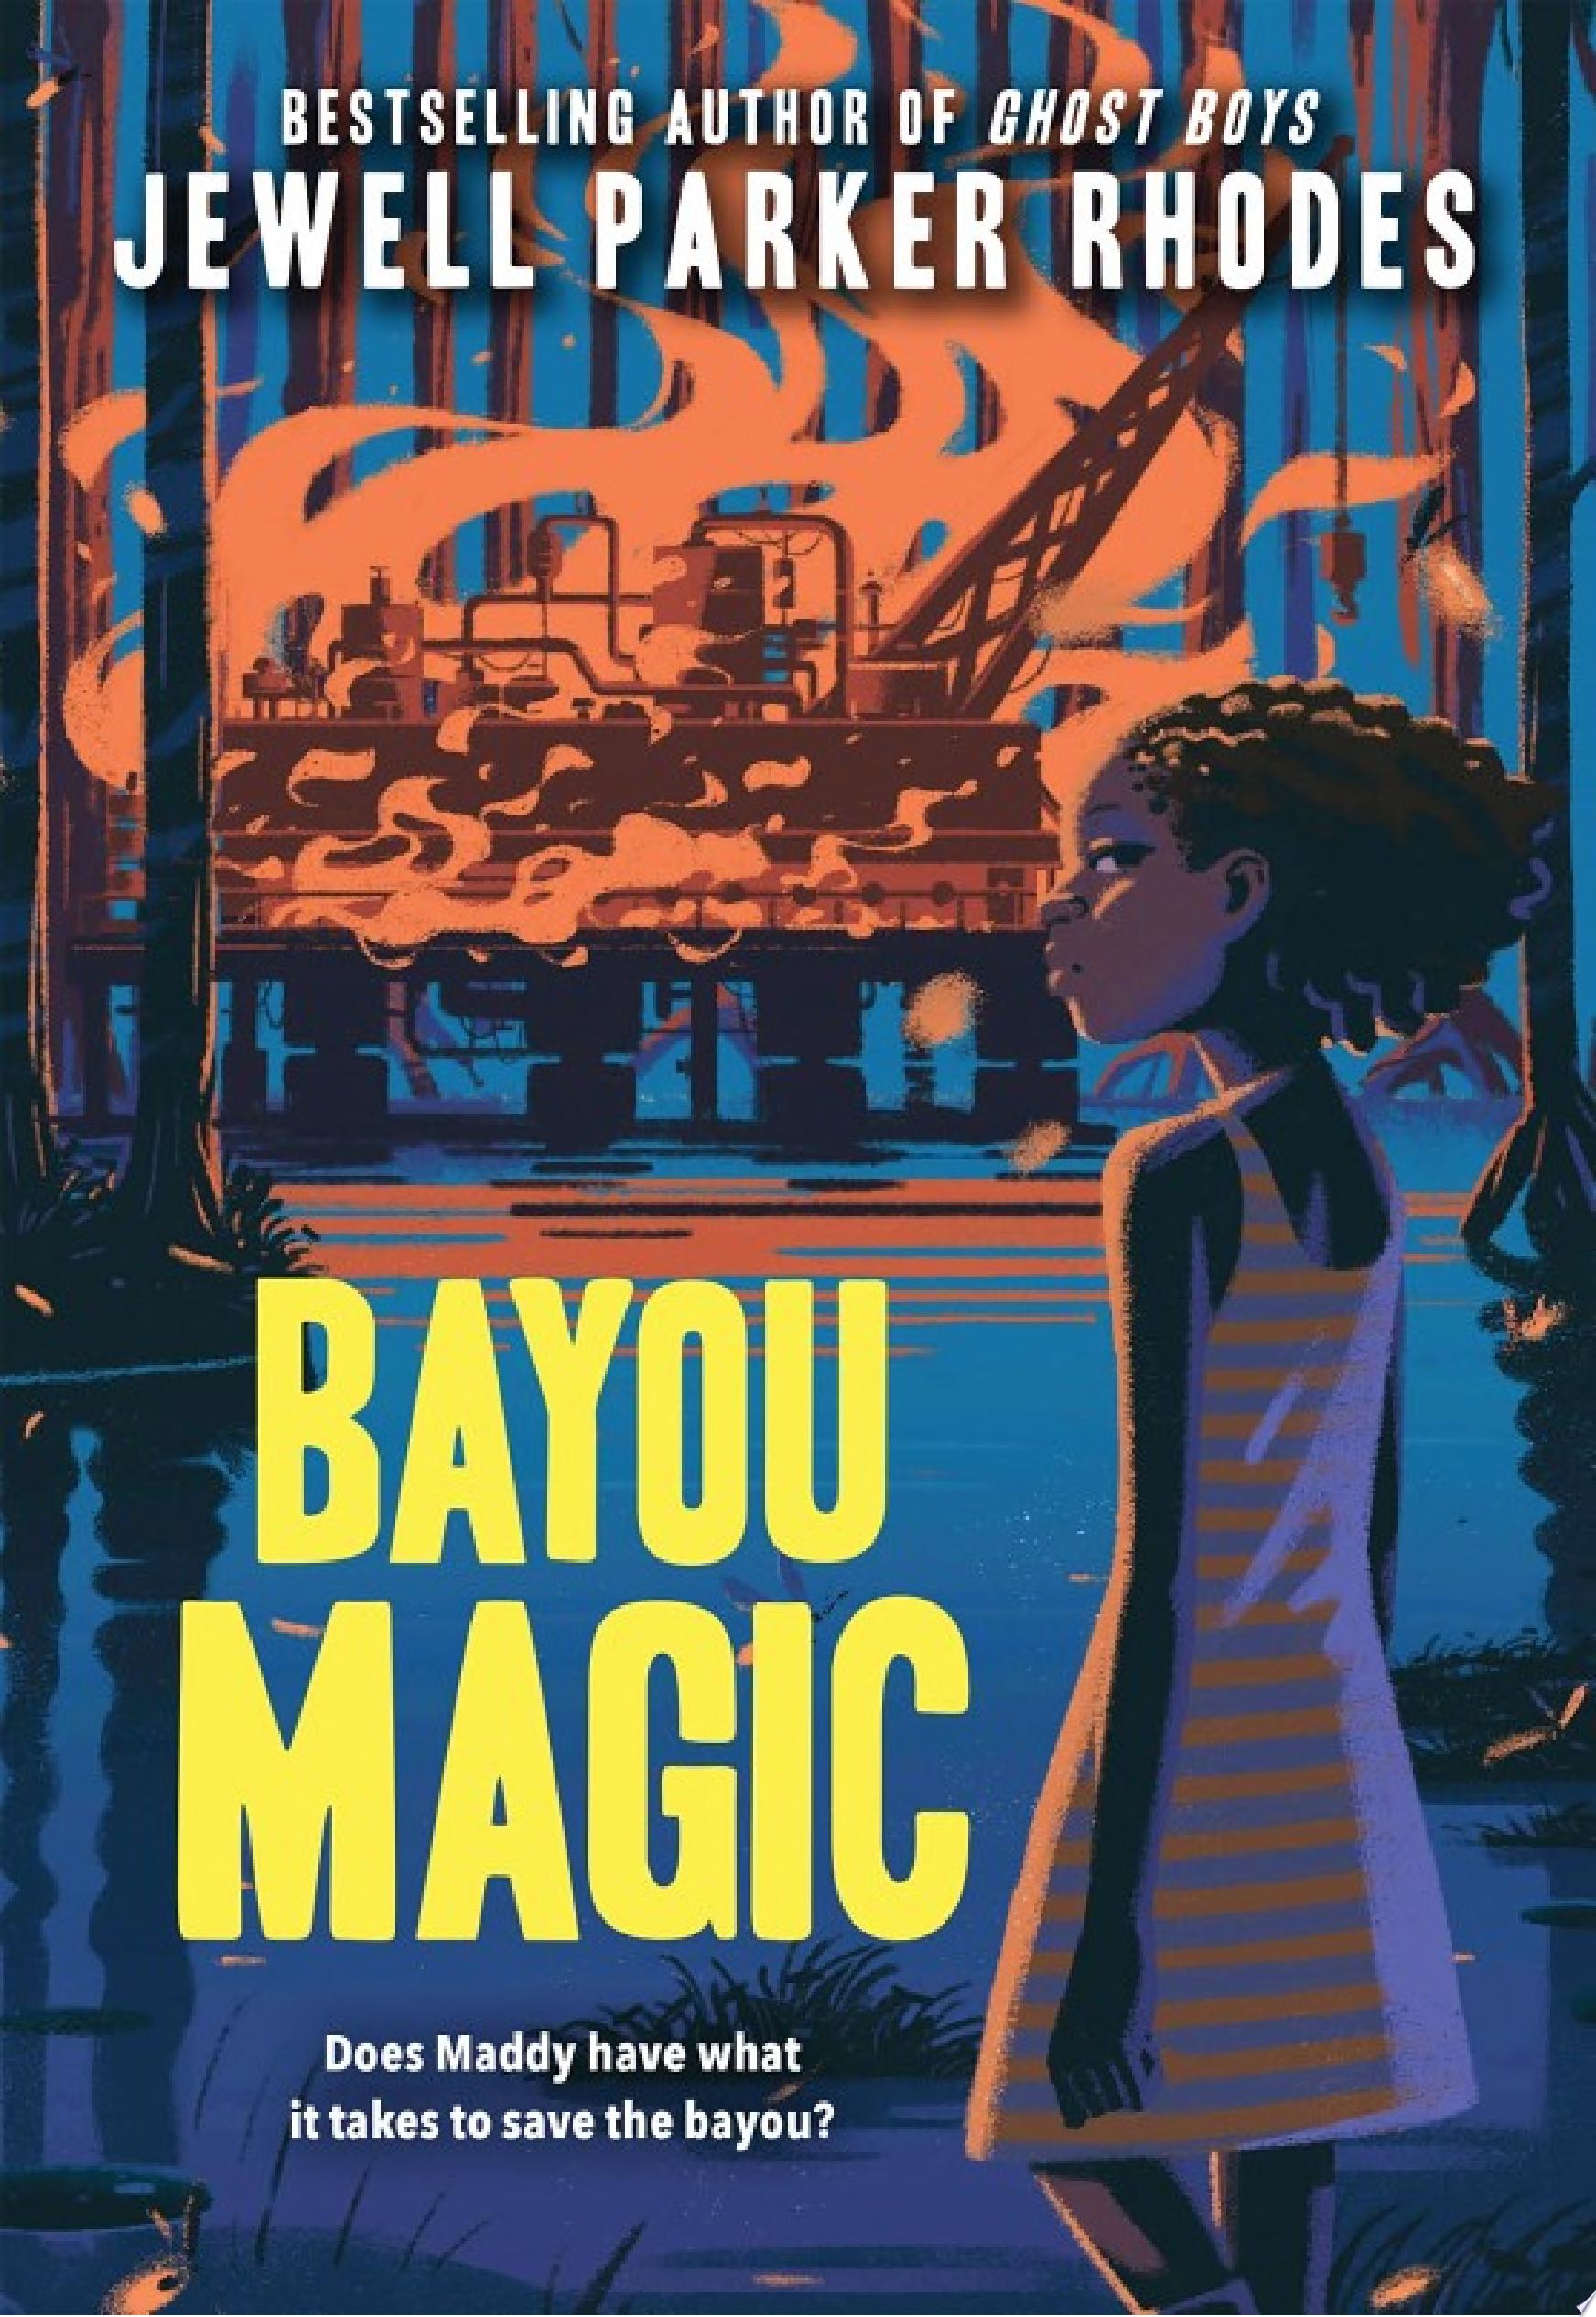 Image for "Bayou Magic"